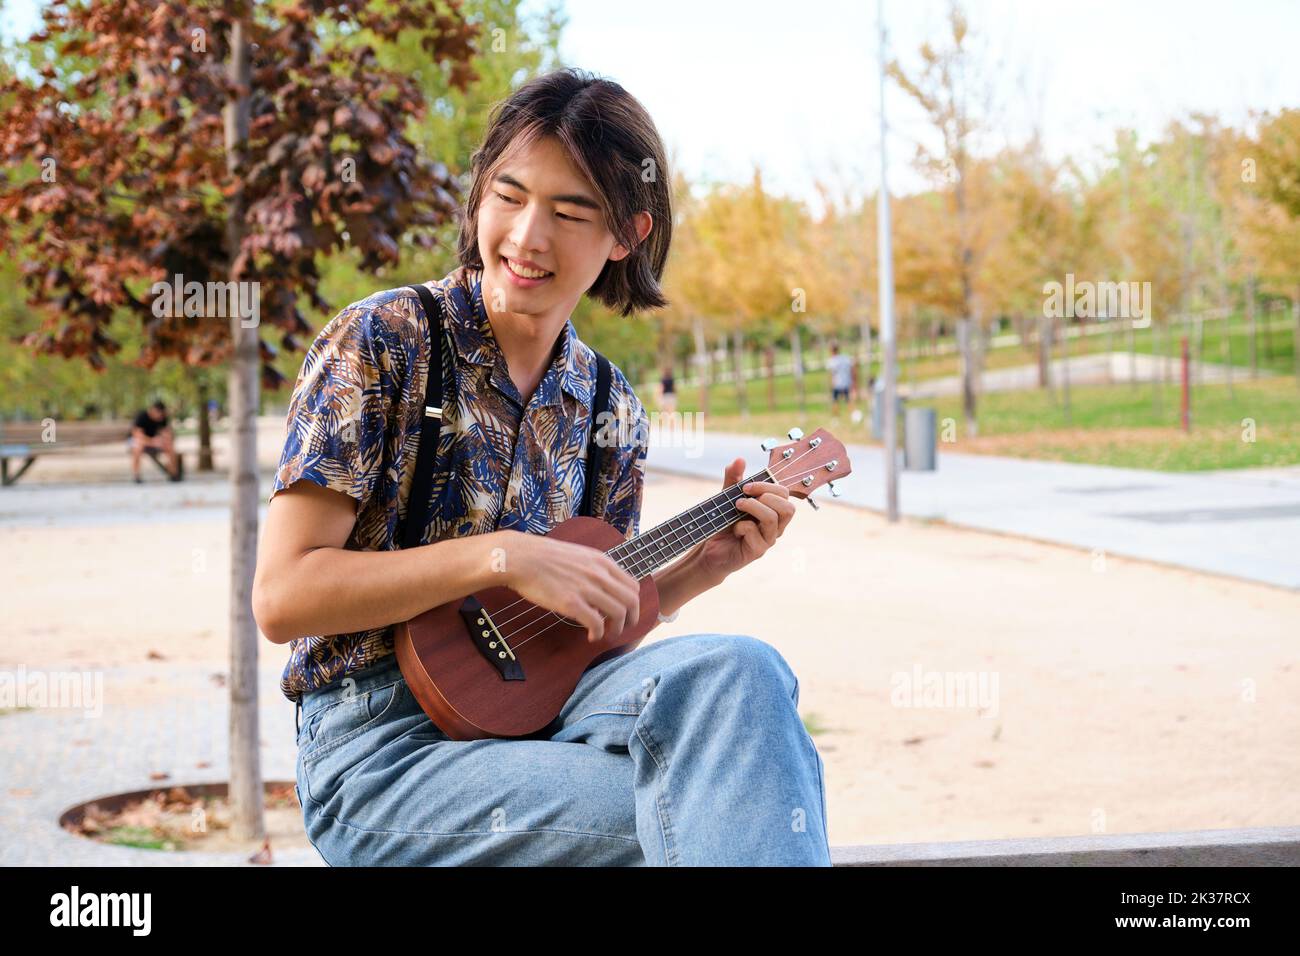 Taiwanese guy smiling and playing acoustic Ukulele guitar sitting on a bench. Stock Photo